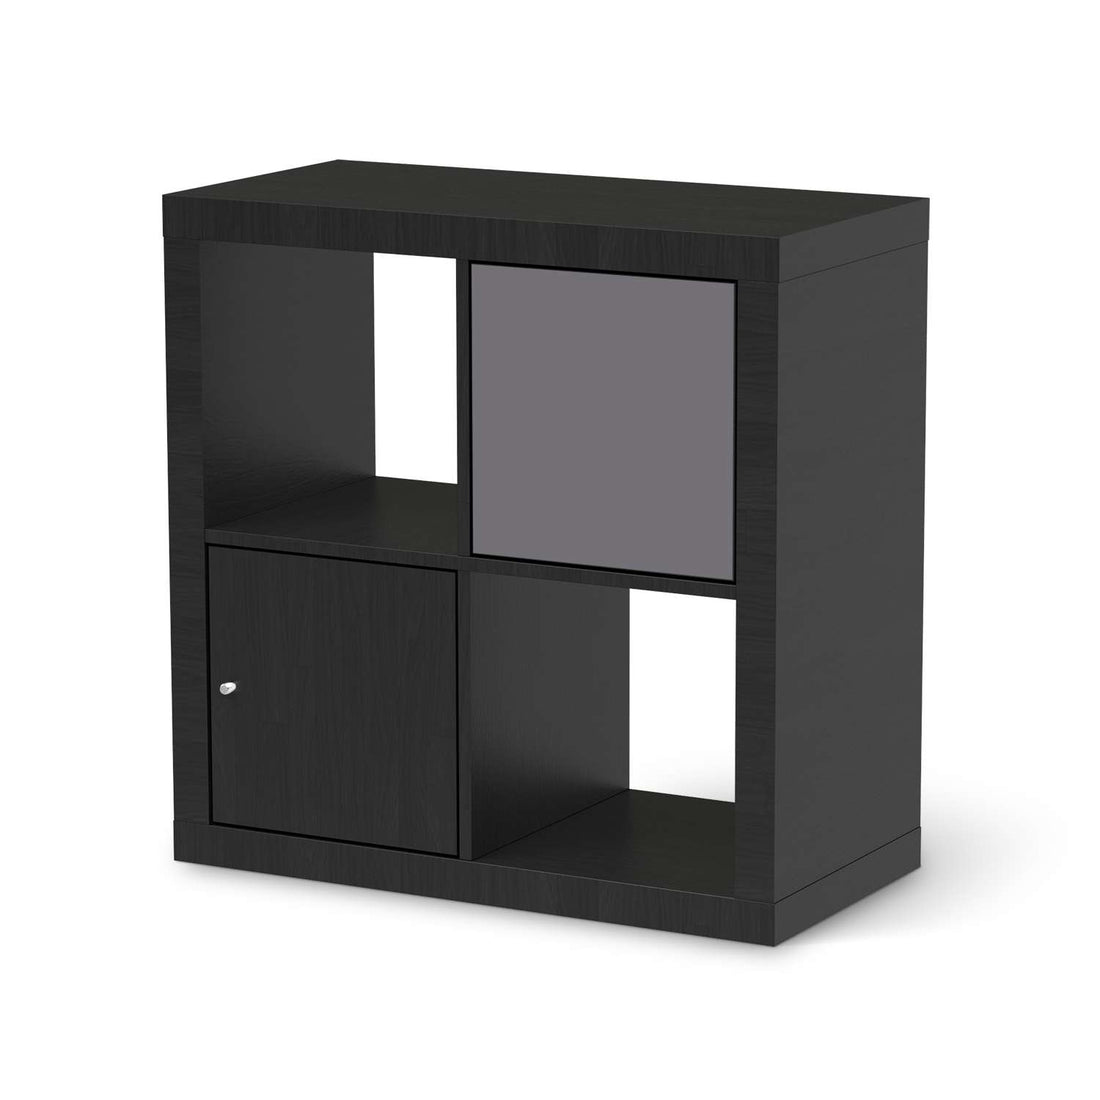 Selbstklebende Folie Grau Light - IKEA Kallax Regal 1 Türe - schwarz